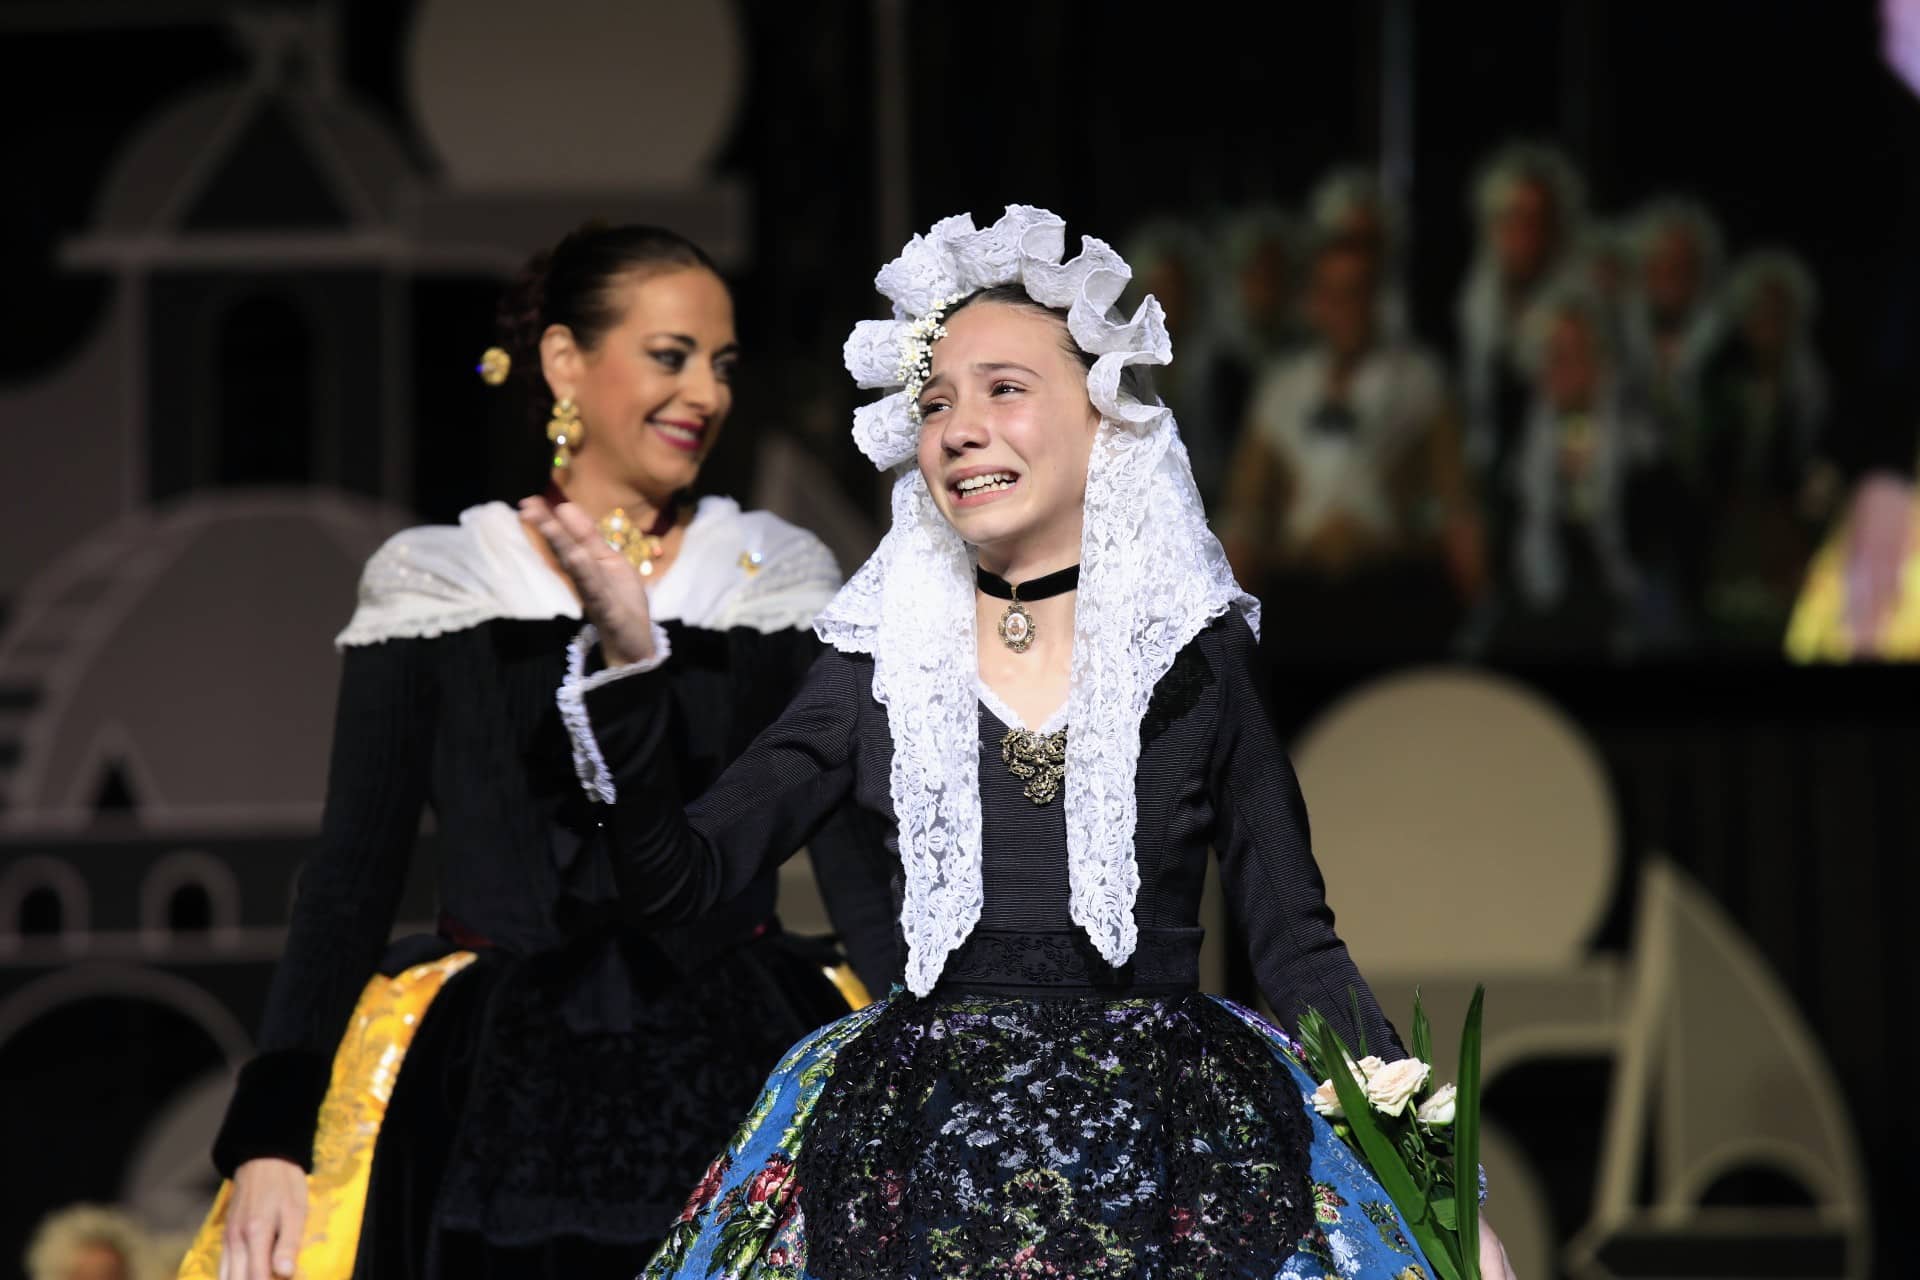 Barcala felicita a Inés Llavador Castelló, Bellea del Foc Infantil 2023, quien cumple sus “Tres Deseos” en el festival de elección